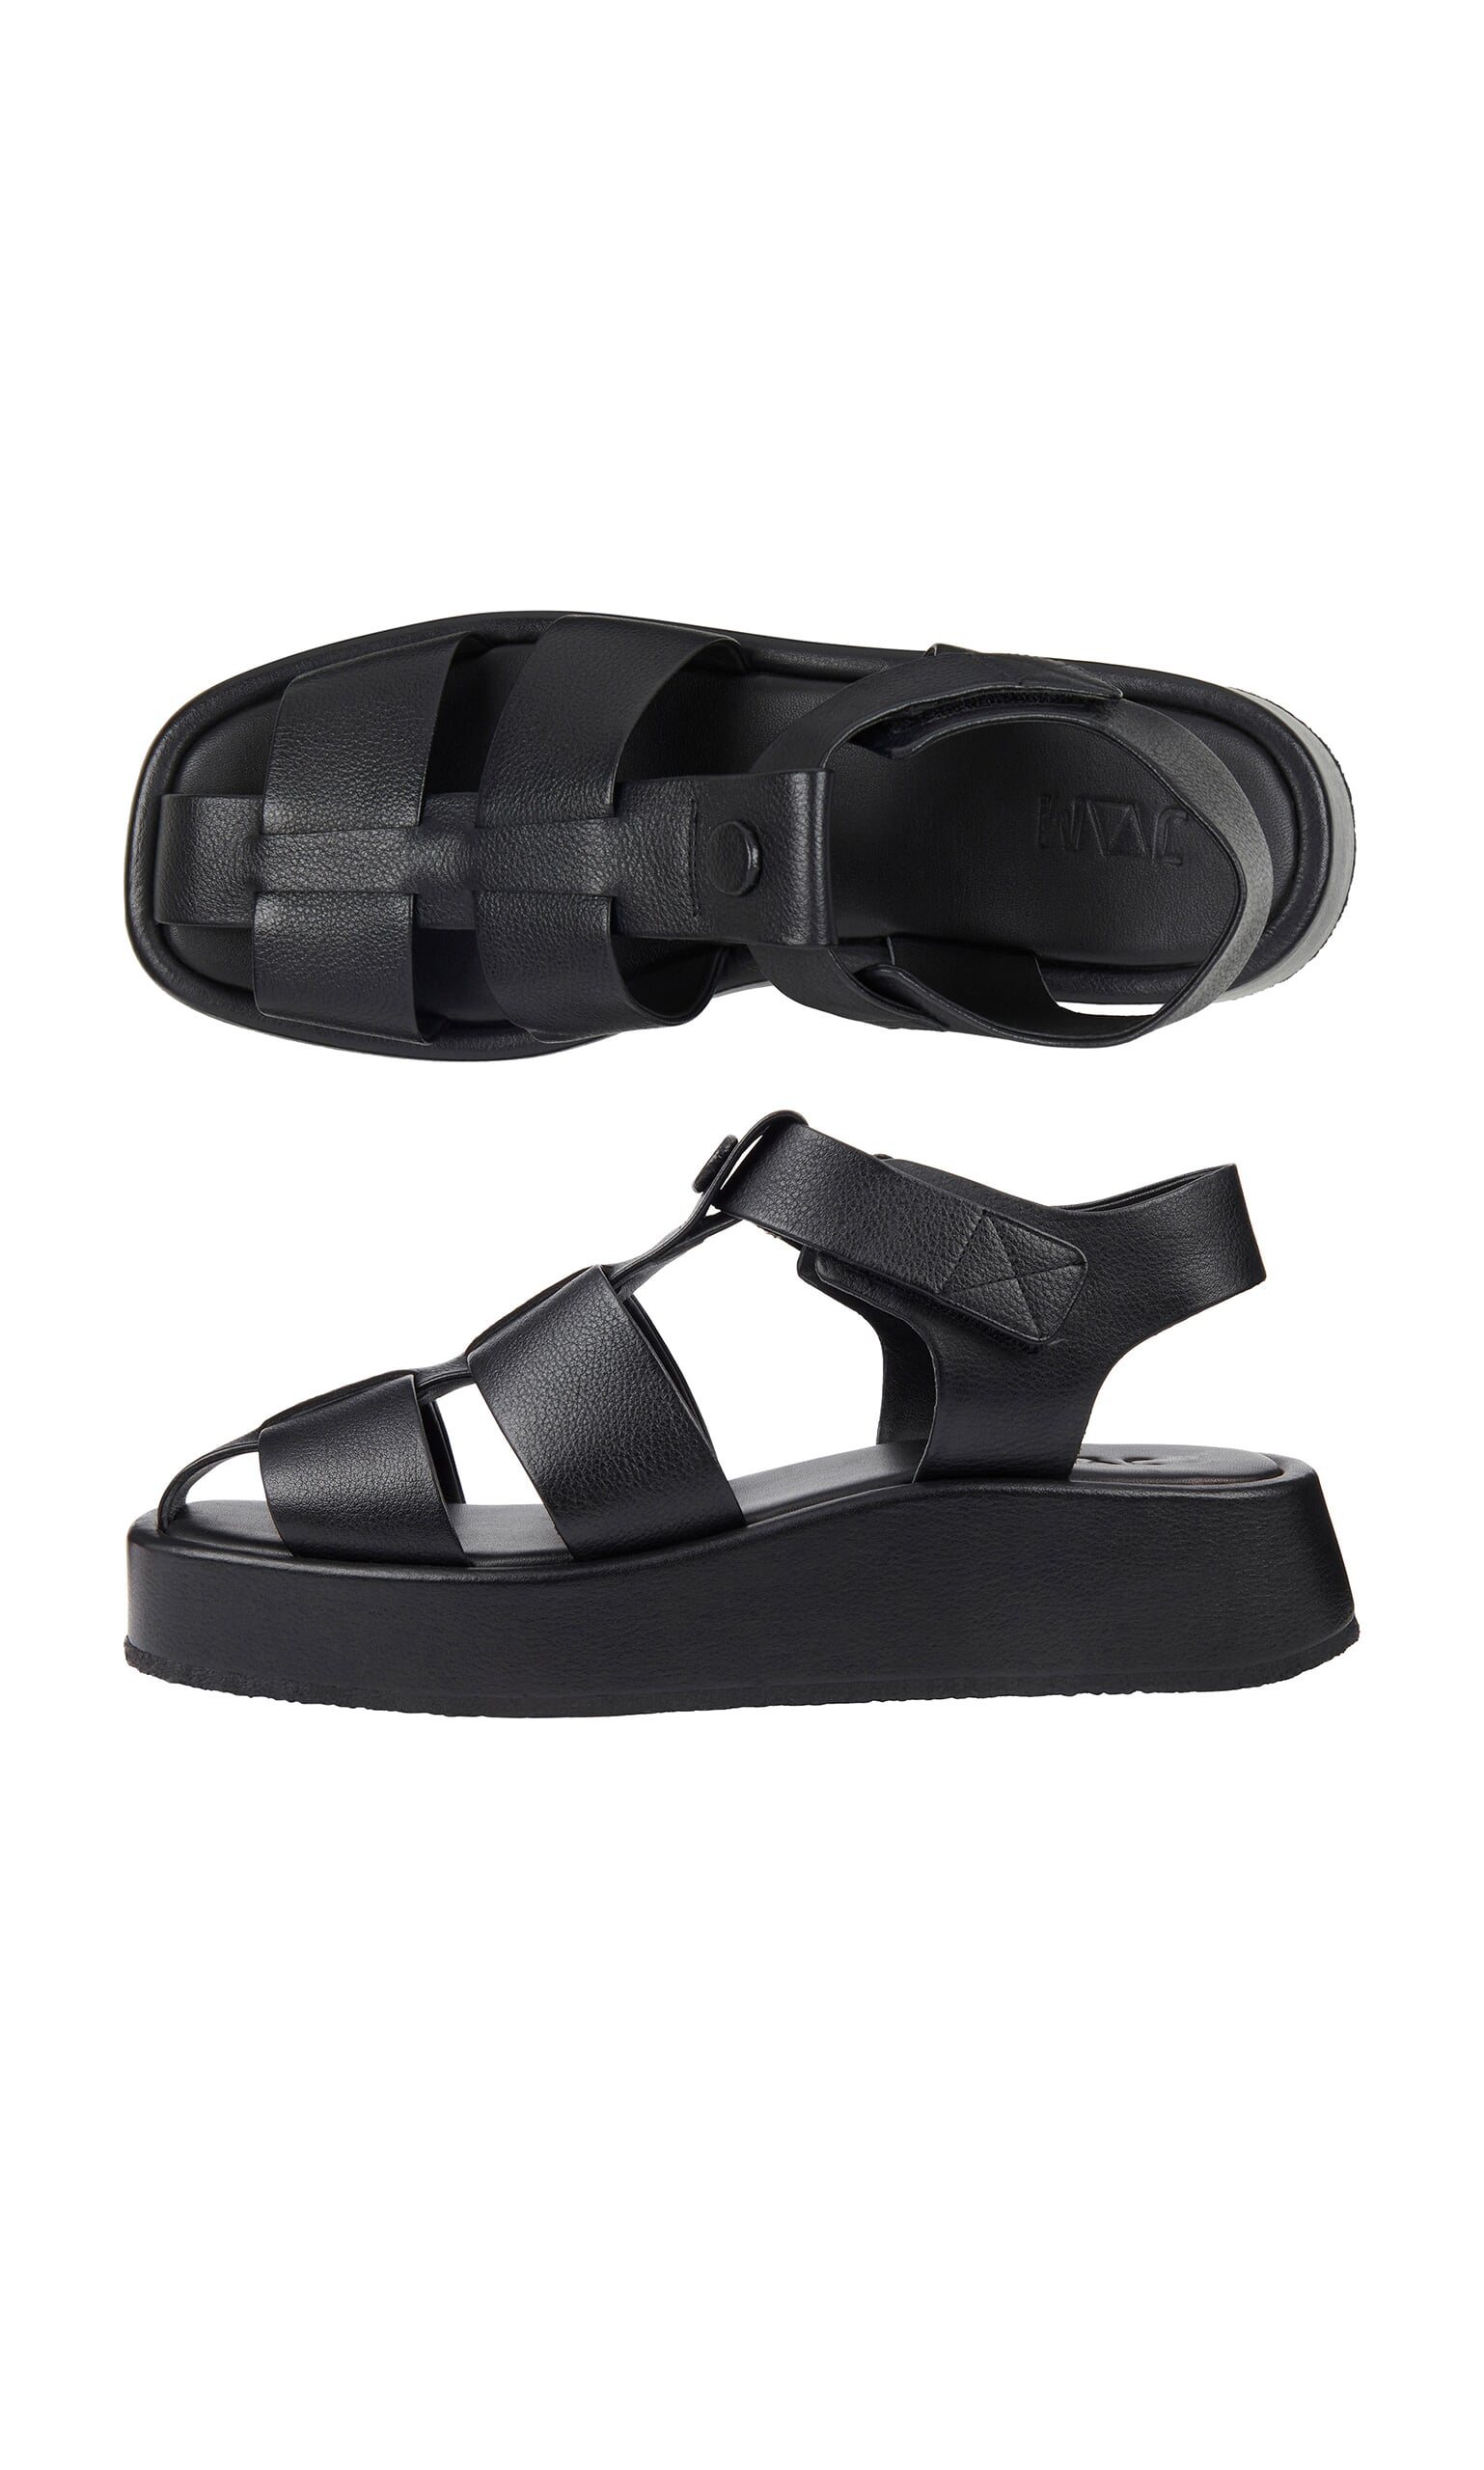 Clyde sandals - Plümo Ltd